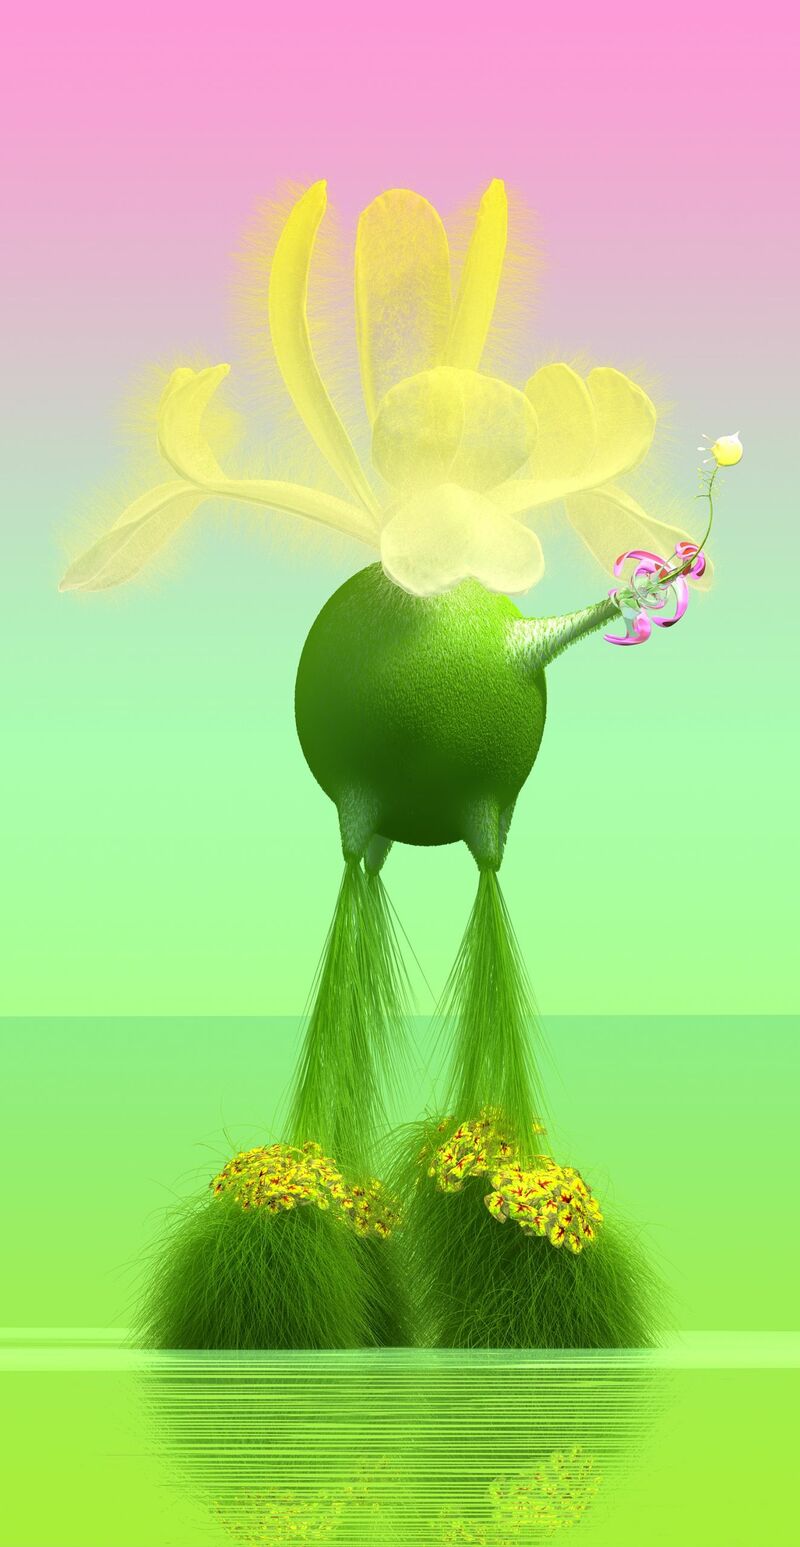 Luminiferous Floralambler. From the virtual Garden series - a Digital Graphics and Cartoon by Stepan Ryabchenko